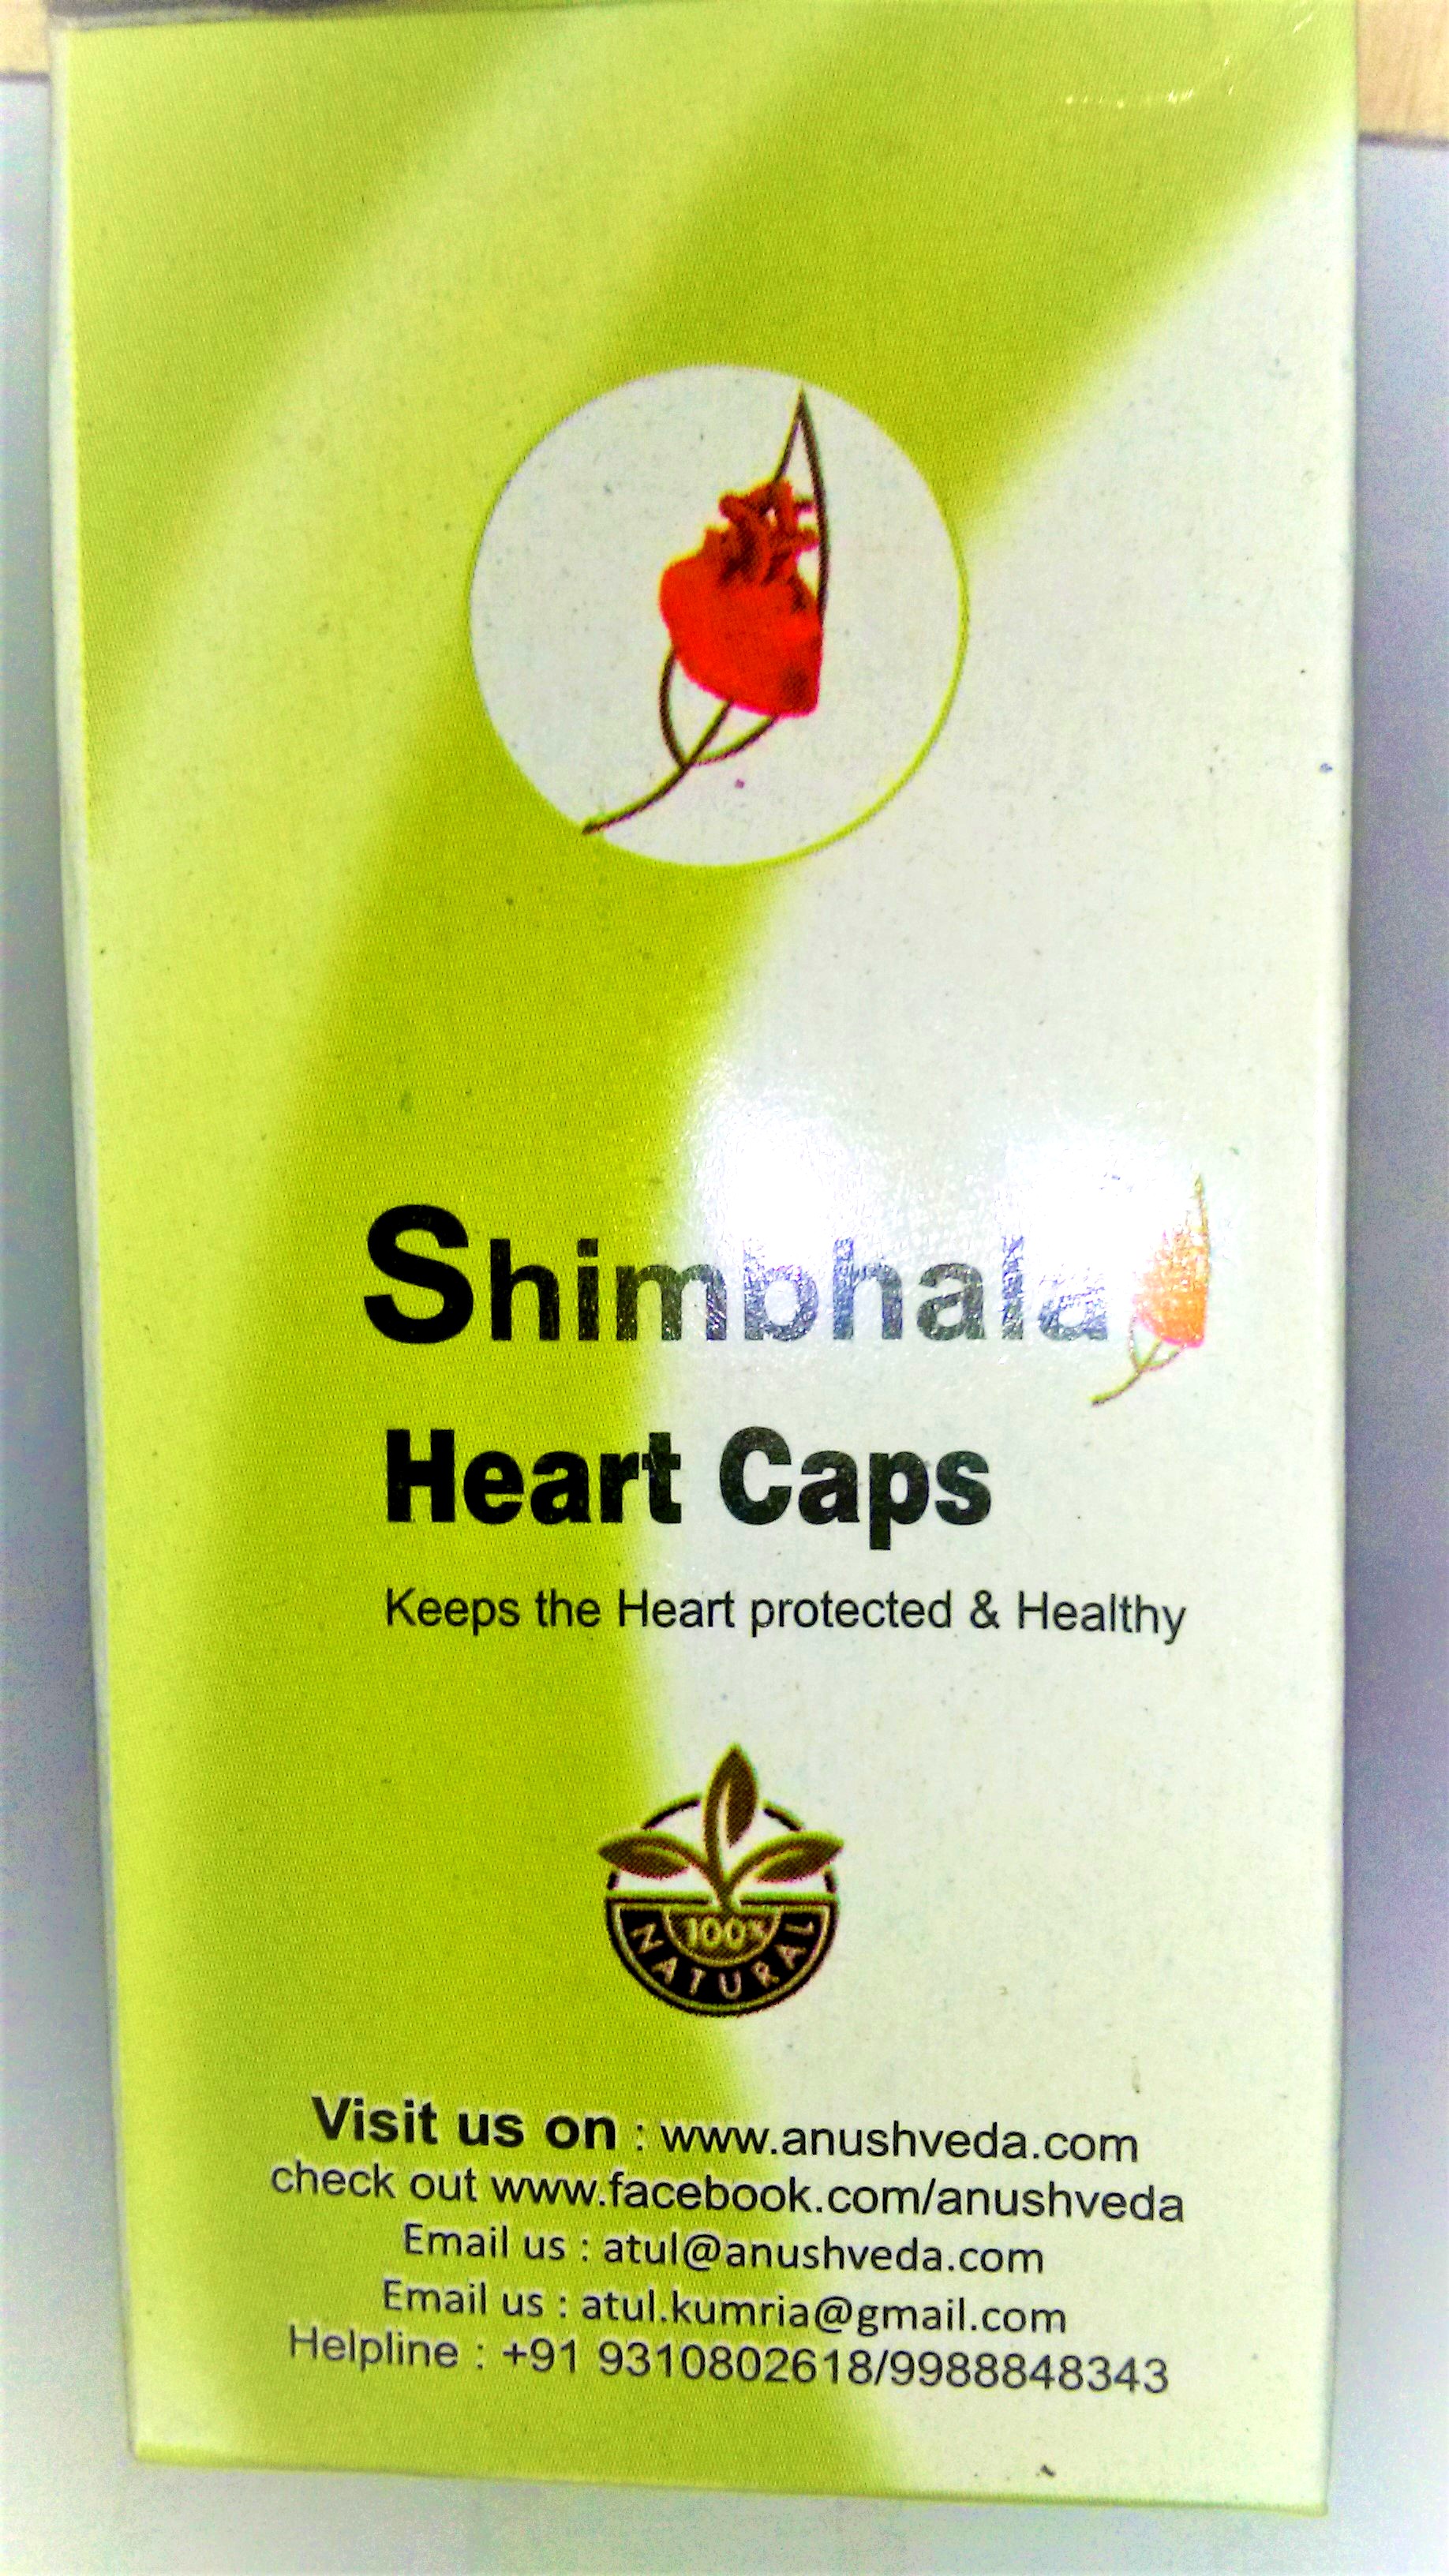 ShimBhala Heart Caps